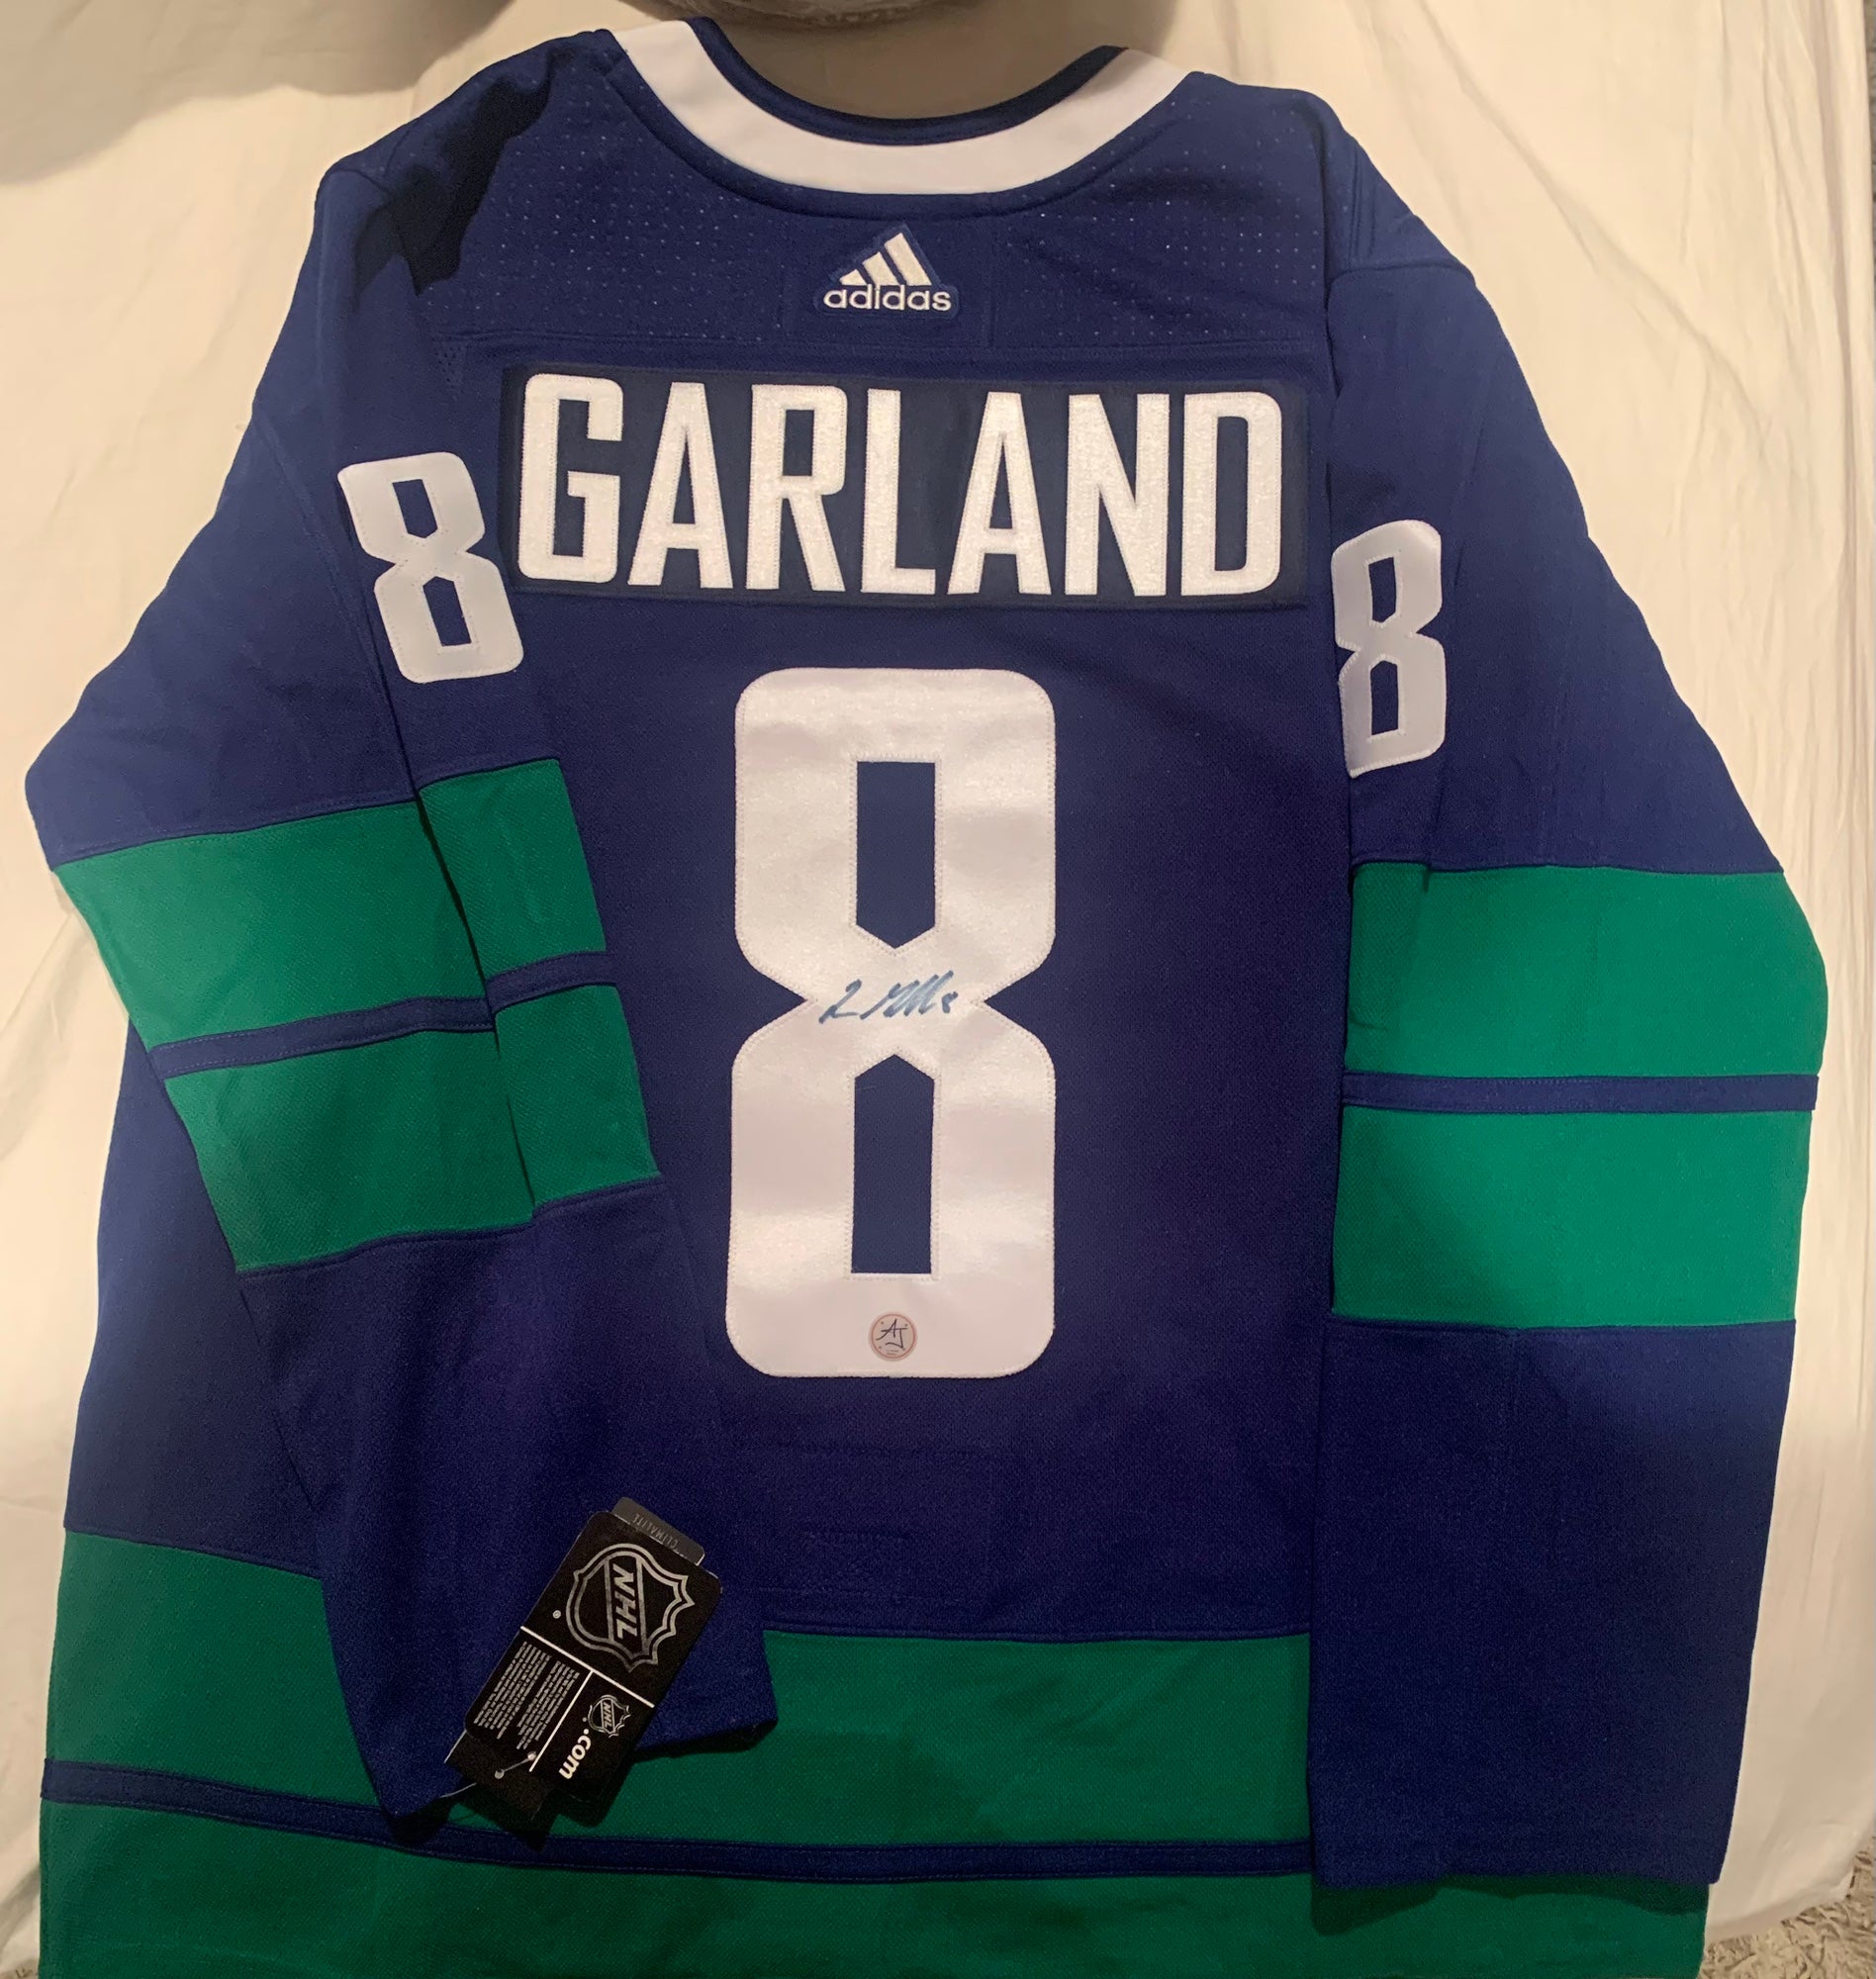 Blackhawks prevent fans from buying Connor Bedard jerseys - HockeyFeed